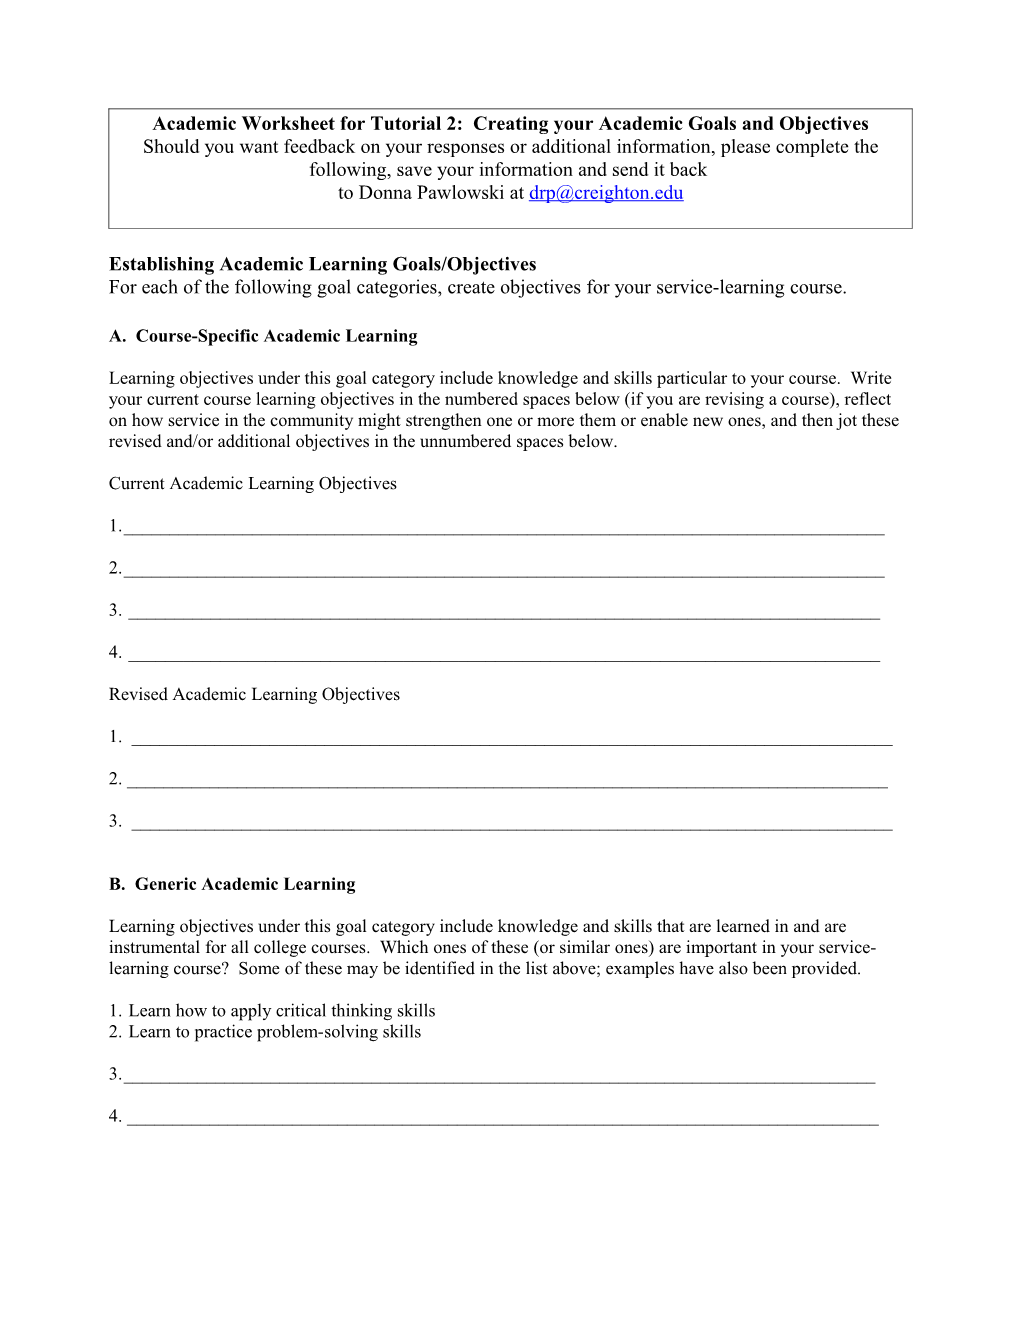 WORKSHEET 1 Establishing Academic Learning Objectives